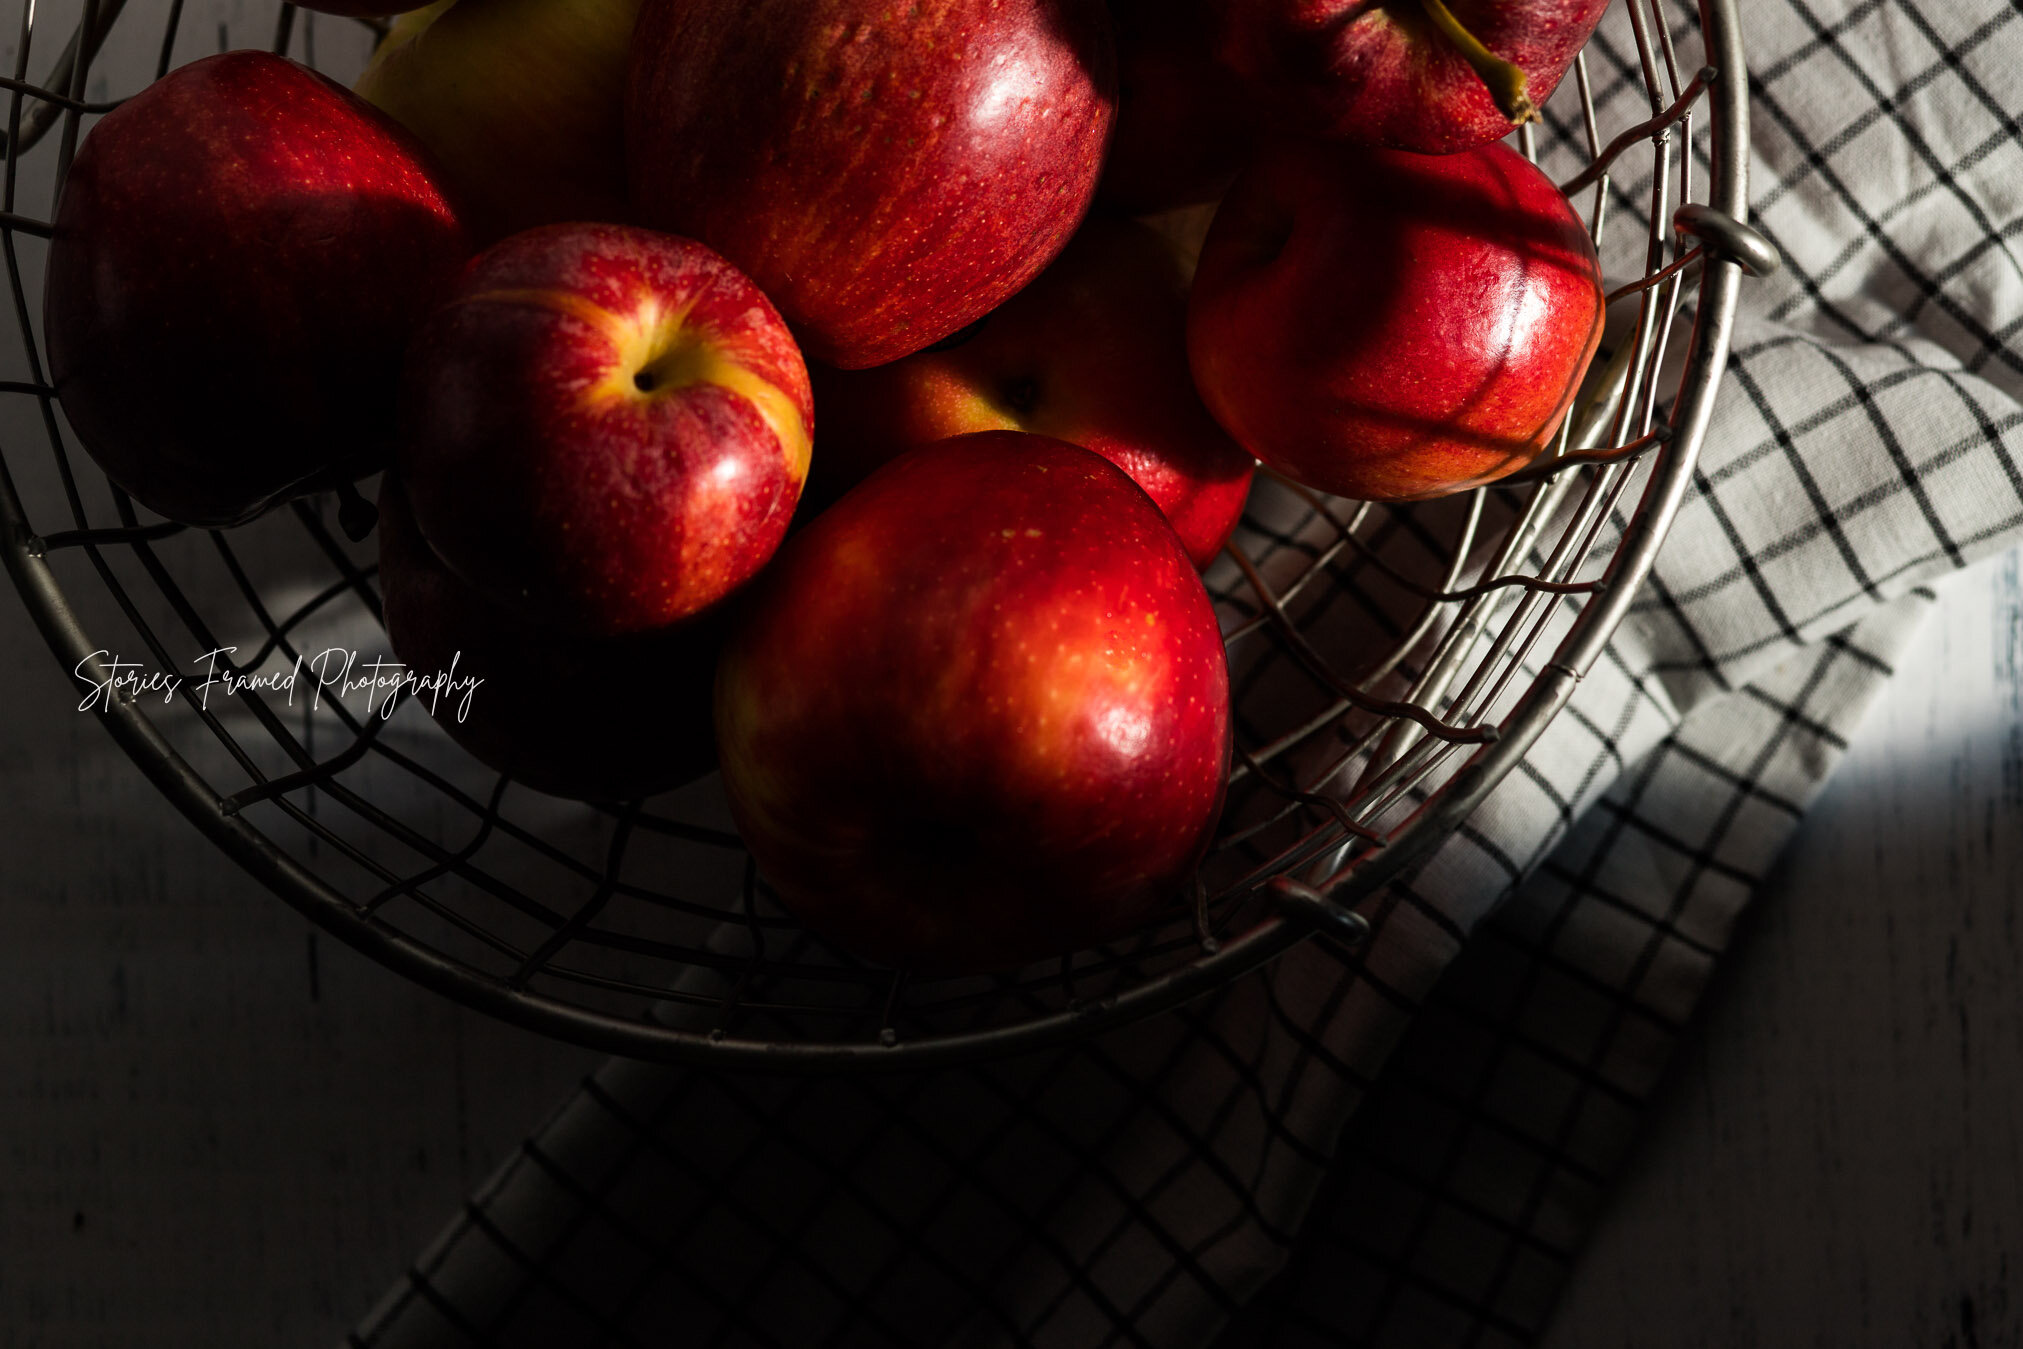 03-31-days-of-joy-red-apples.jpg